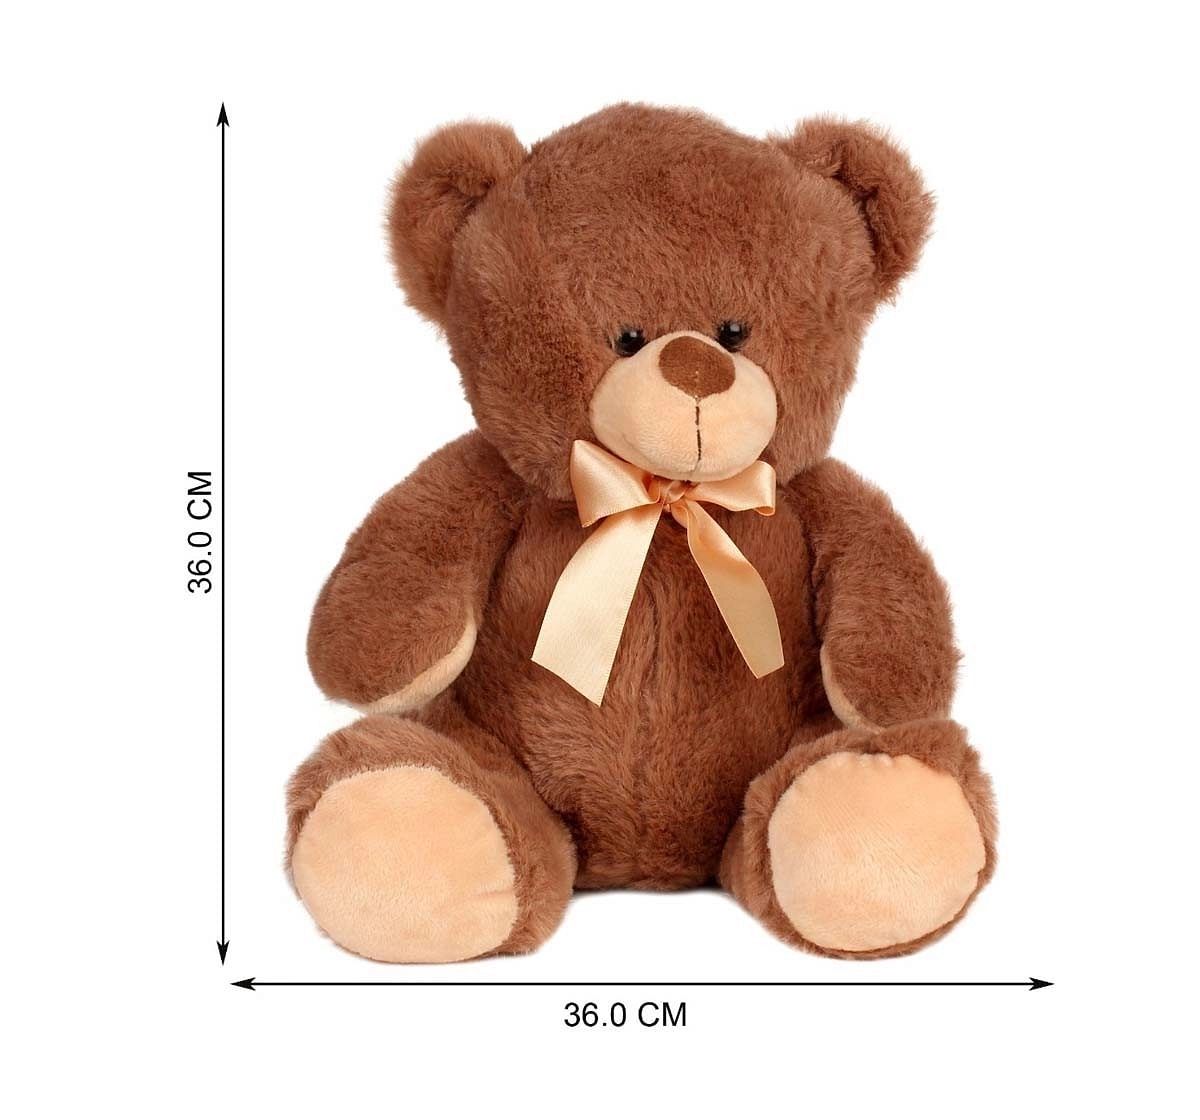 Qingdao Sitting Bear Brown & Cream, 27Cm Teddy Bears for Kids Age 0M+ - 27 Cm